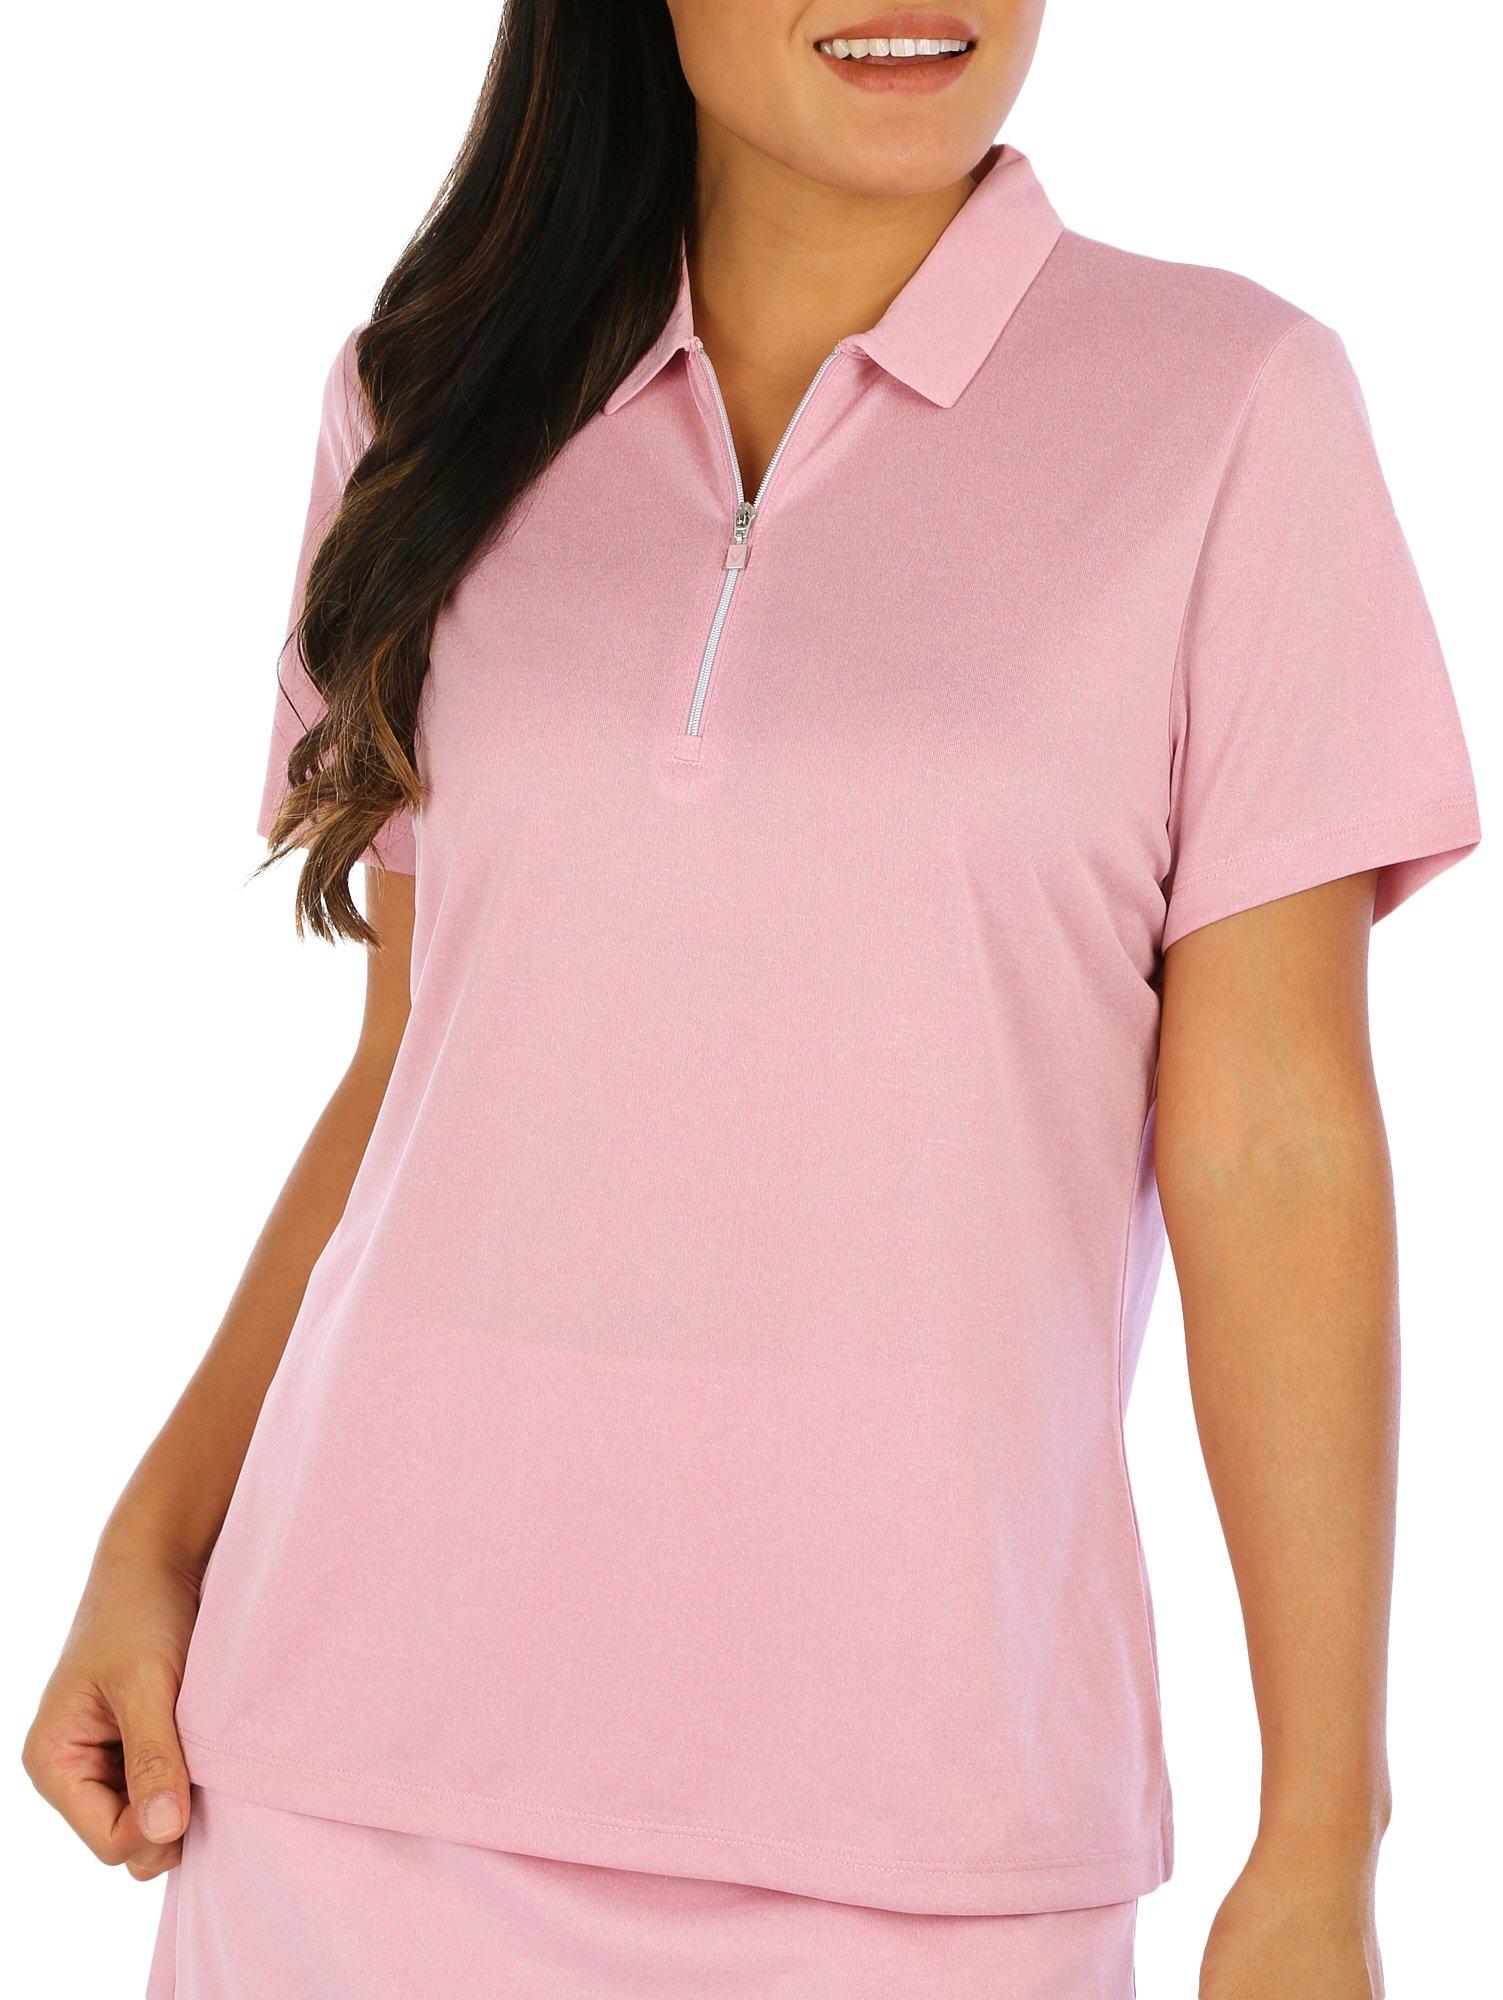 Court Haley Womens Branches Sleeveless Golf Polo Shirt